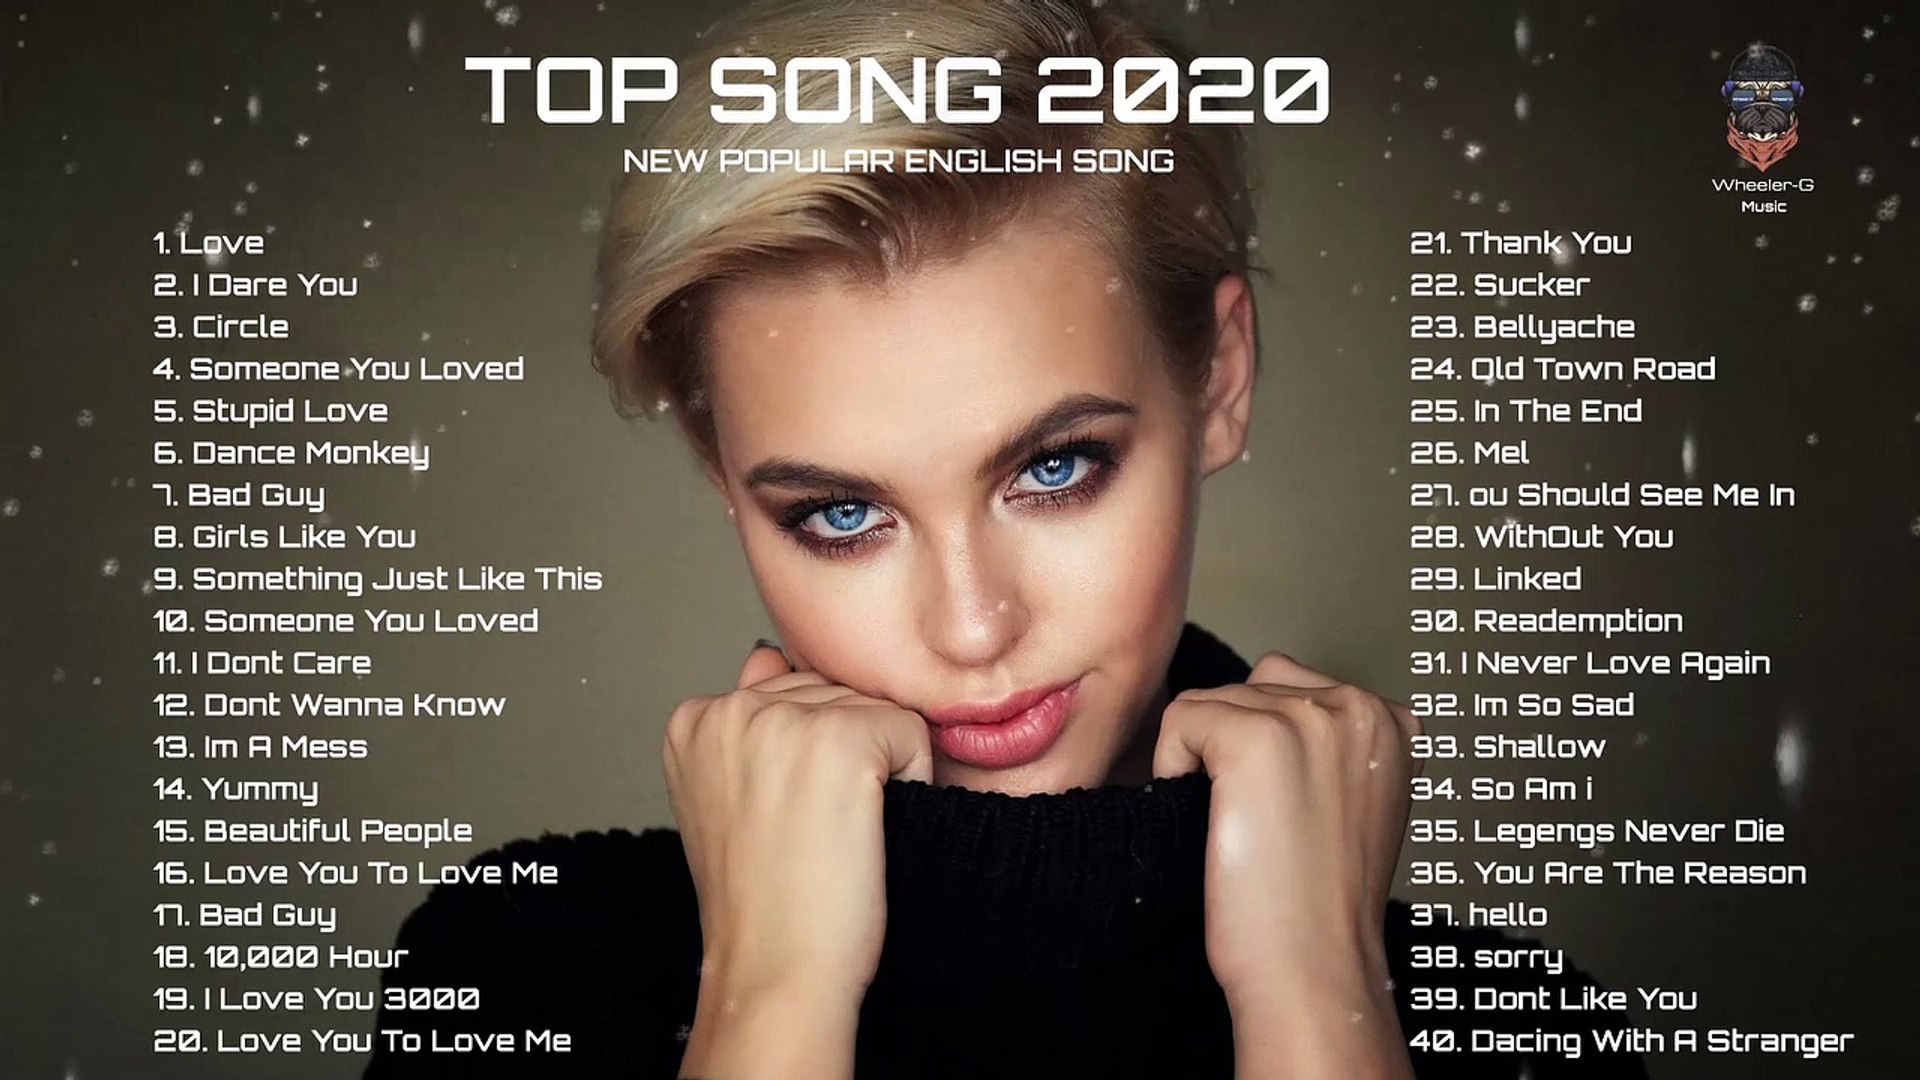 Music Top 50 Song - Music Billboard - Music   Top Songs 202 0 -  [Wheeler-G]